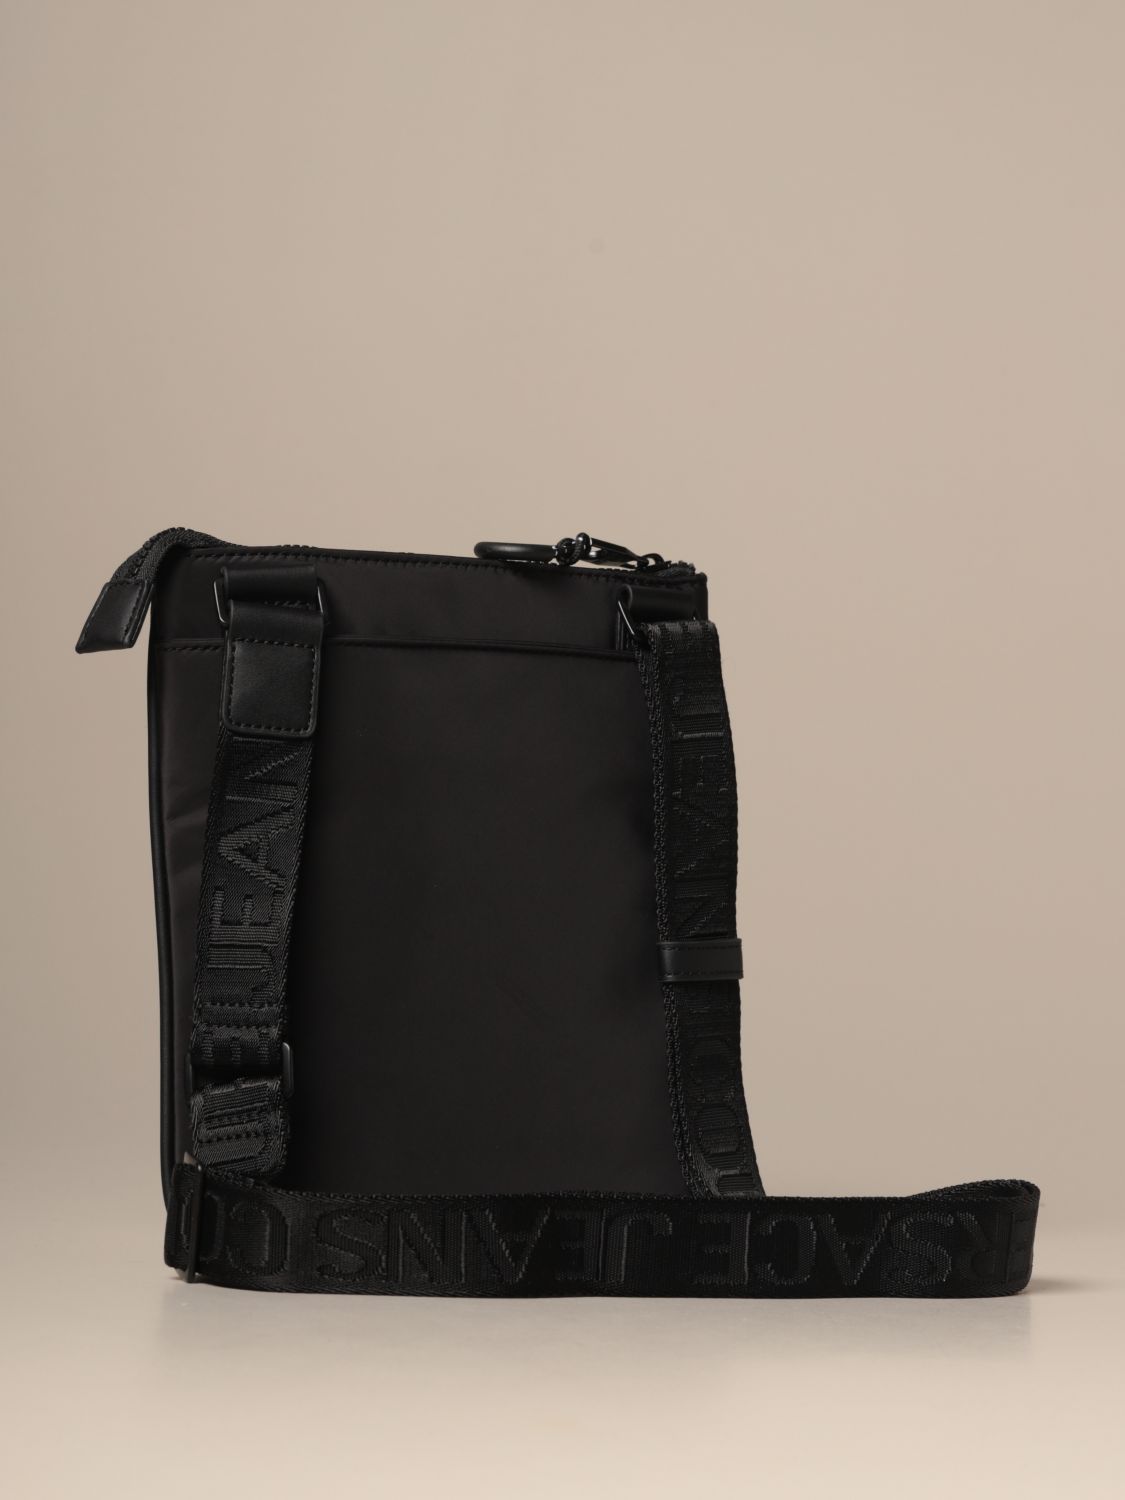 VERSACE JEANS COUTURE: nylon bag | Shoulder Bag Versace Jeans Couture